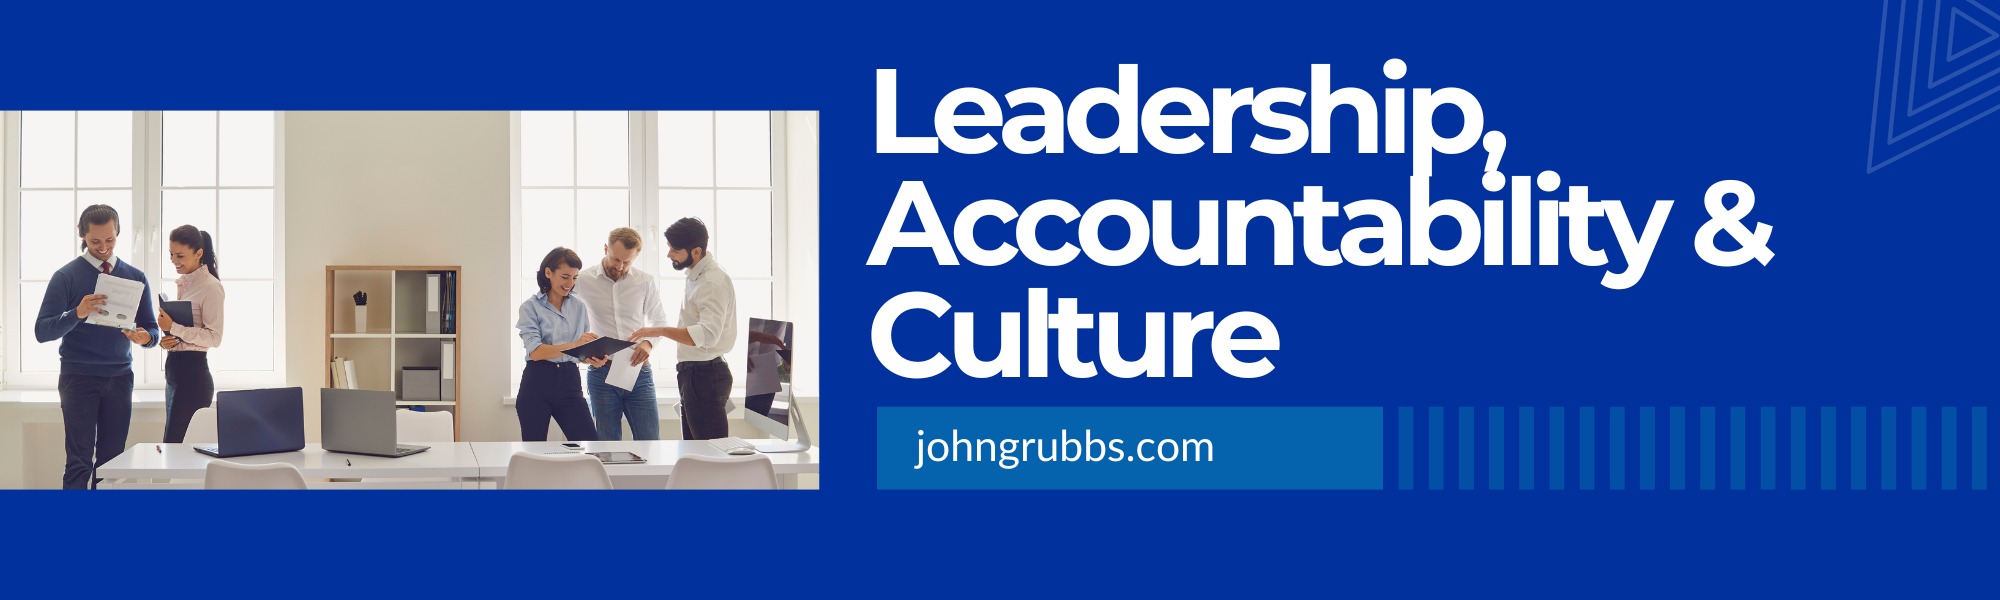 leadership accountability culture